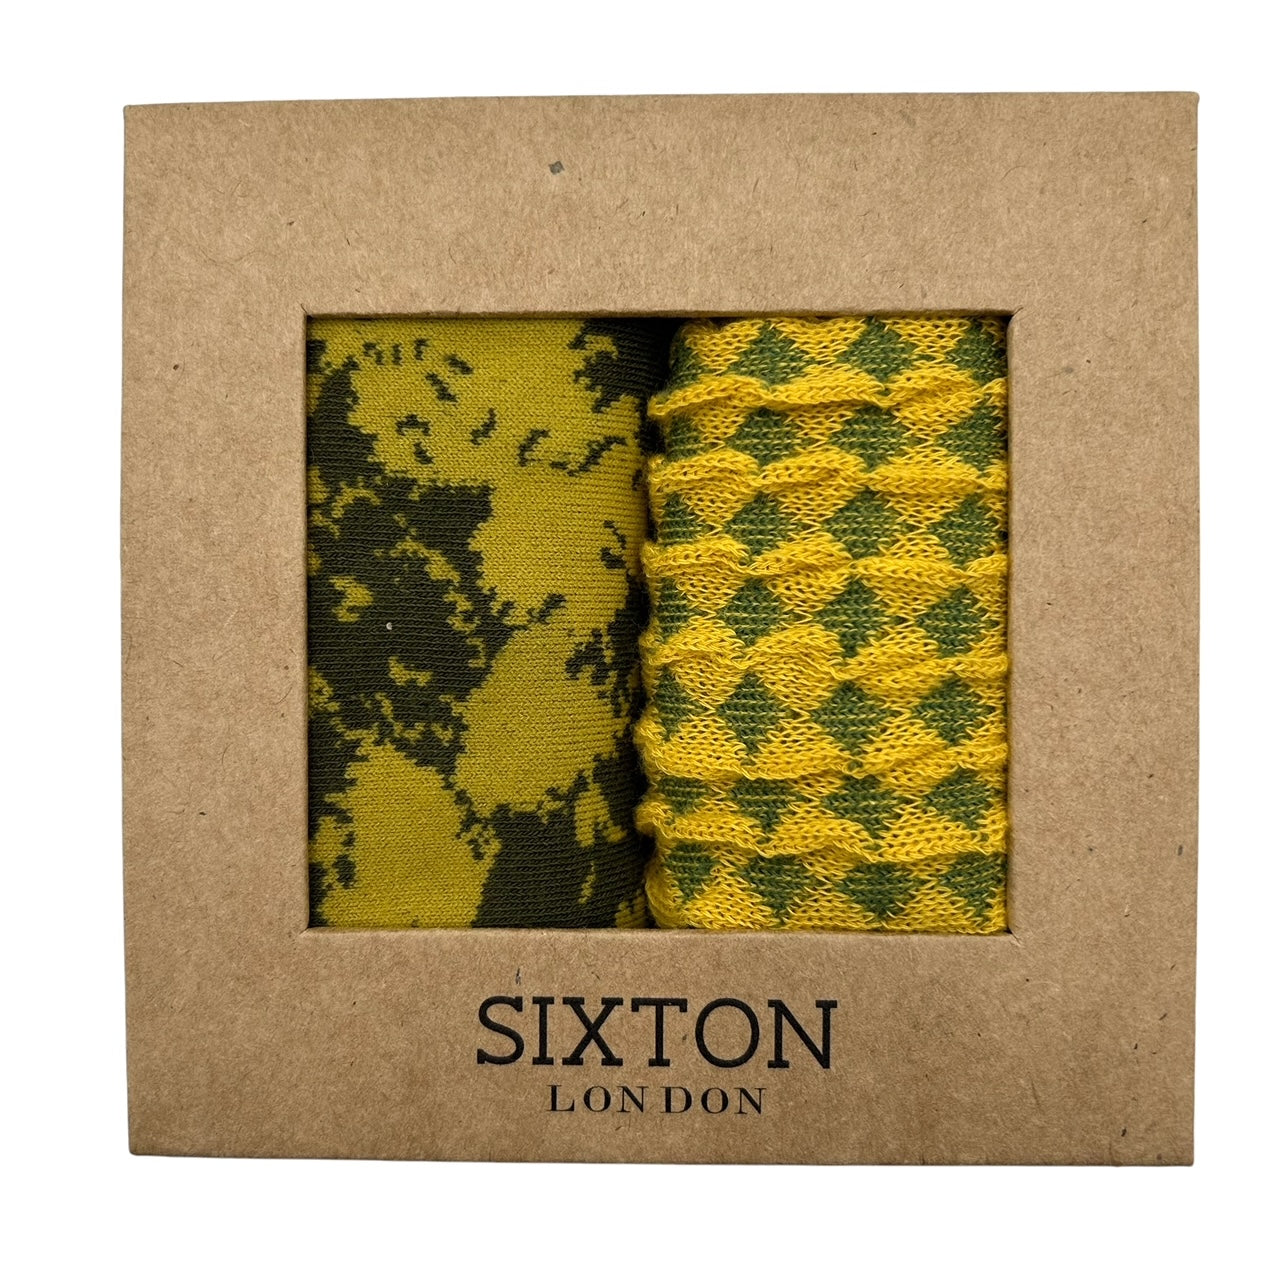 Green & yellow mix duo sock box